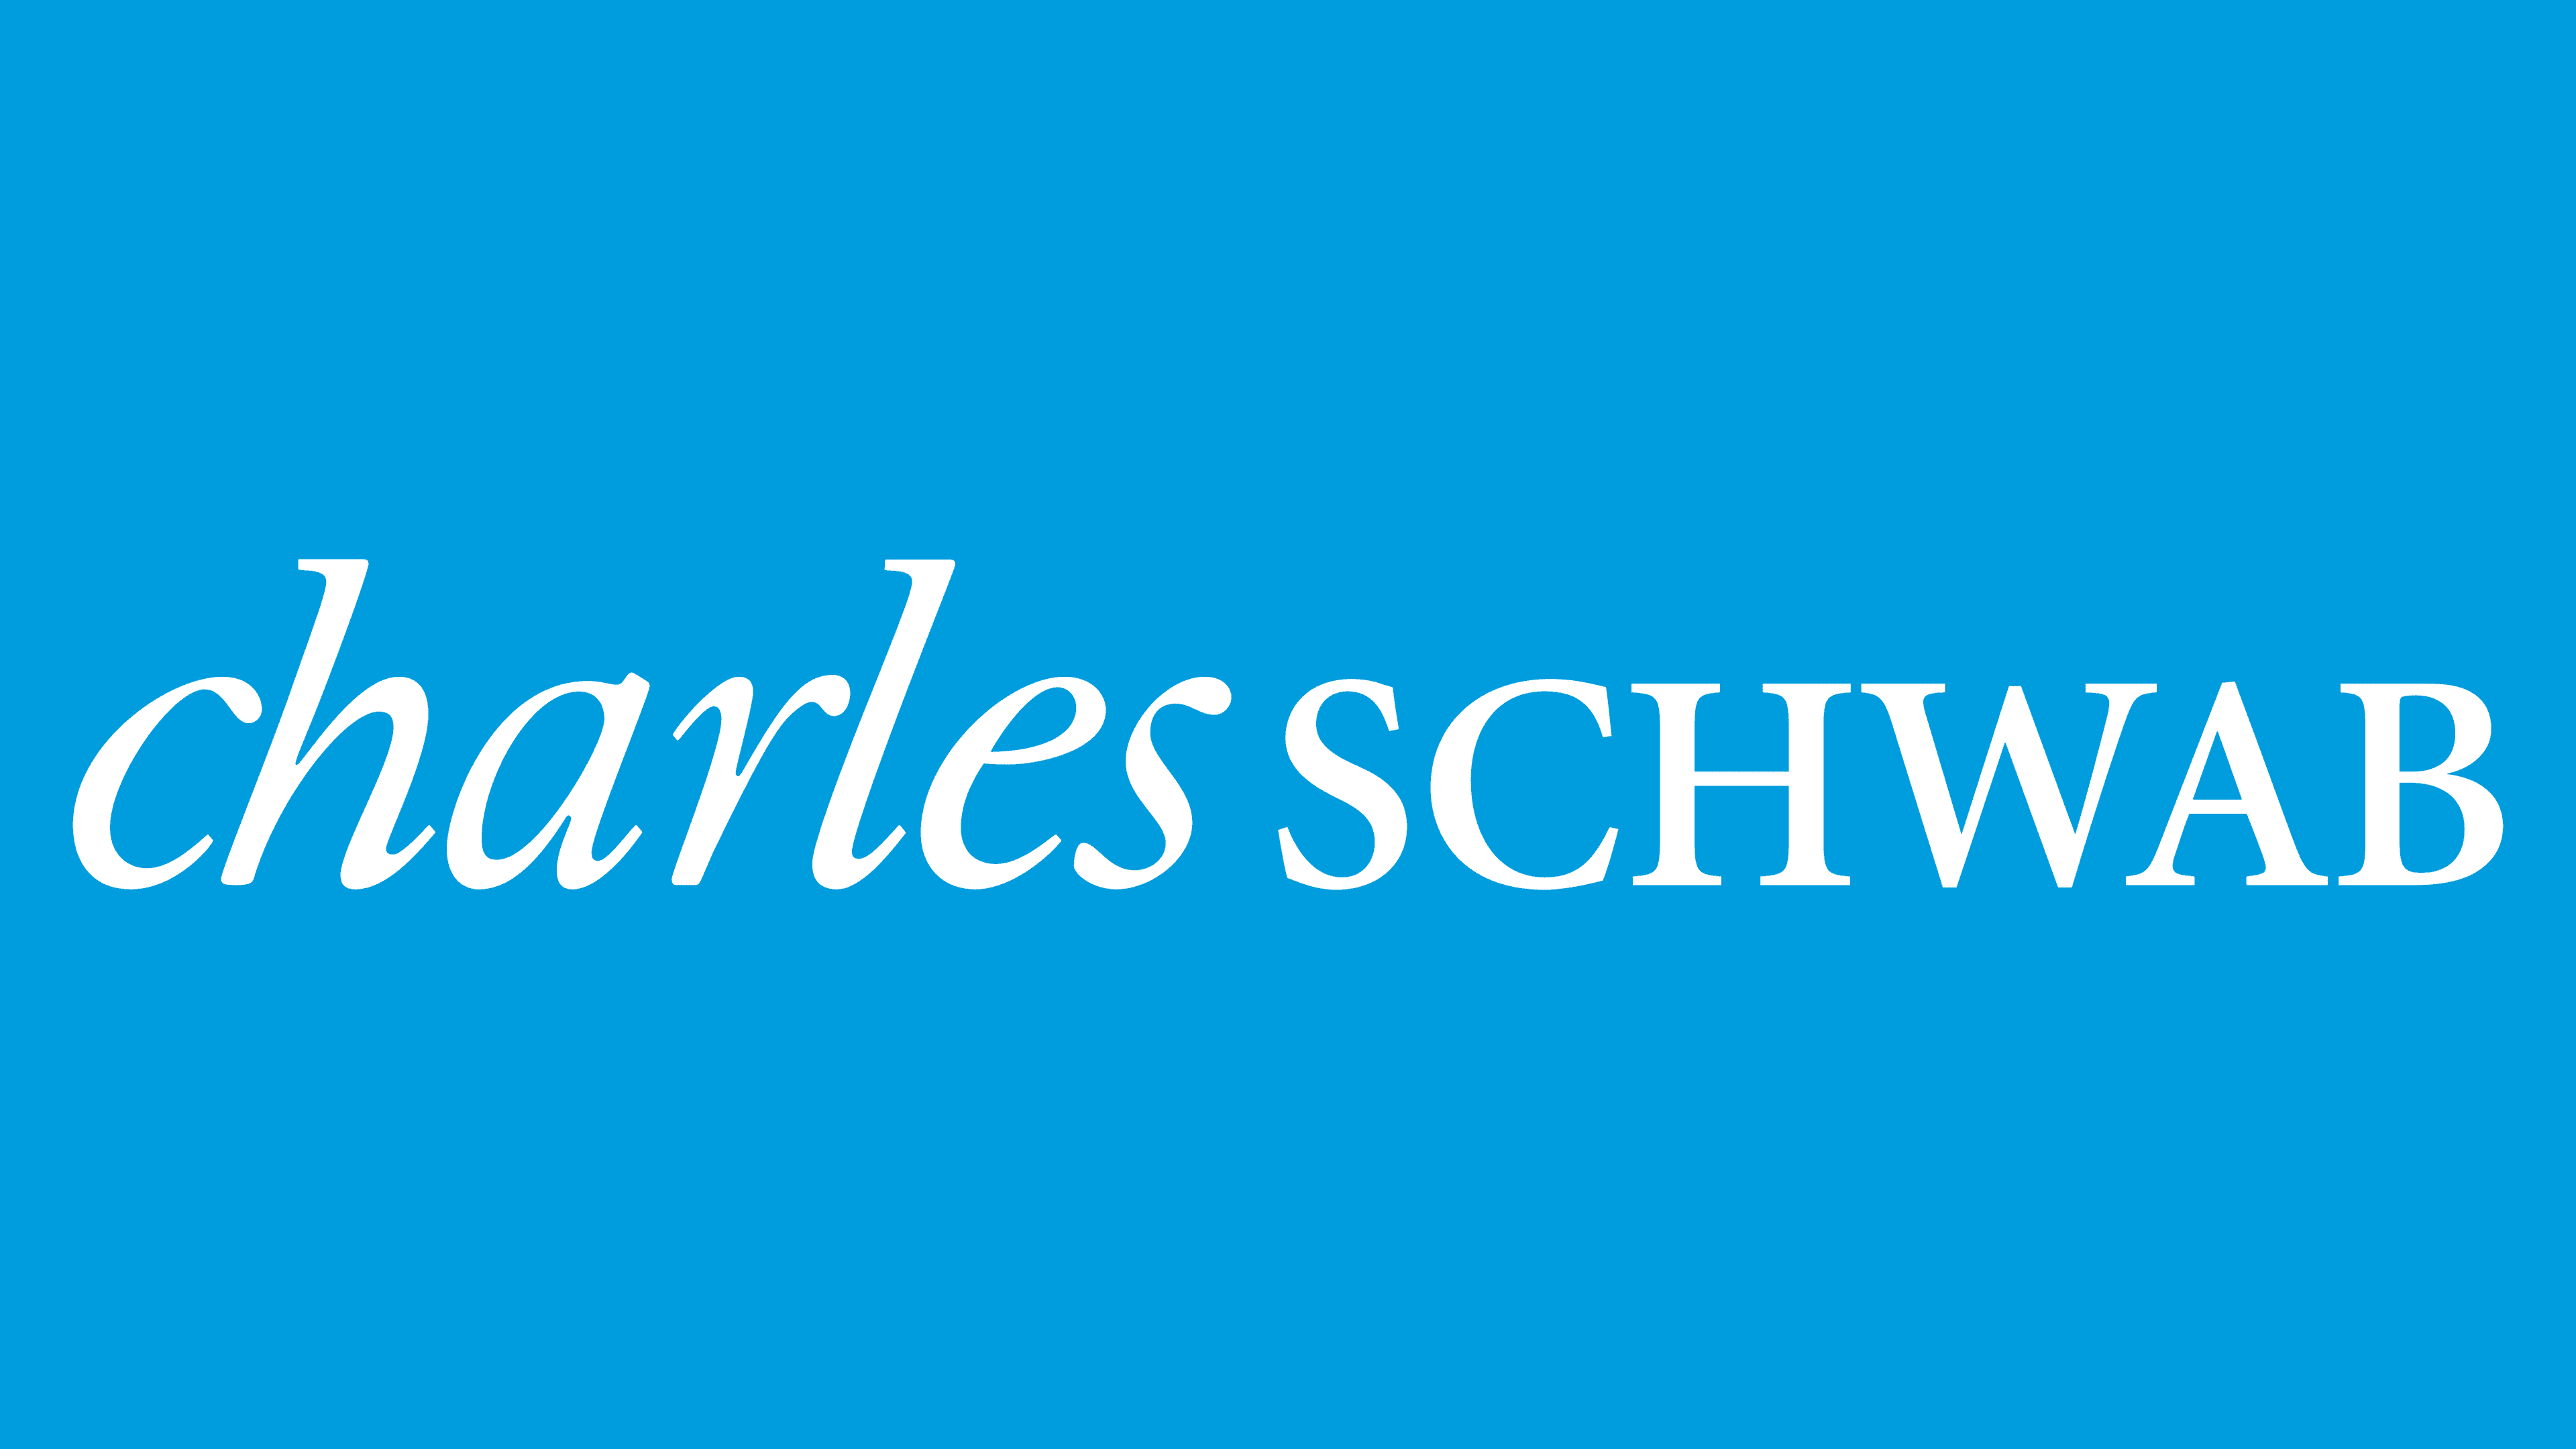 Charles-Schwab-Emblem